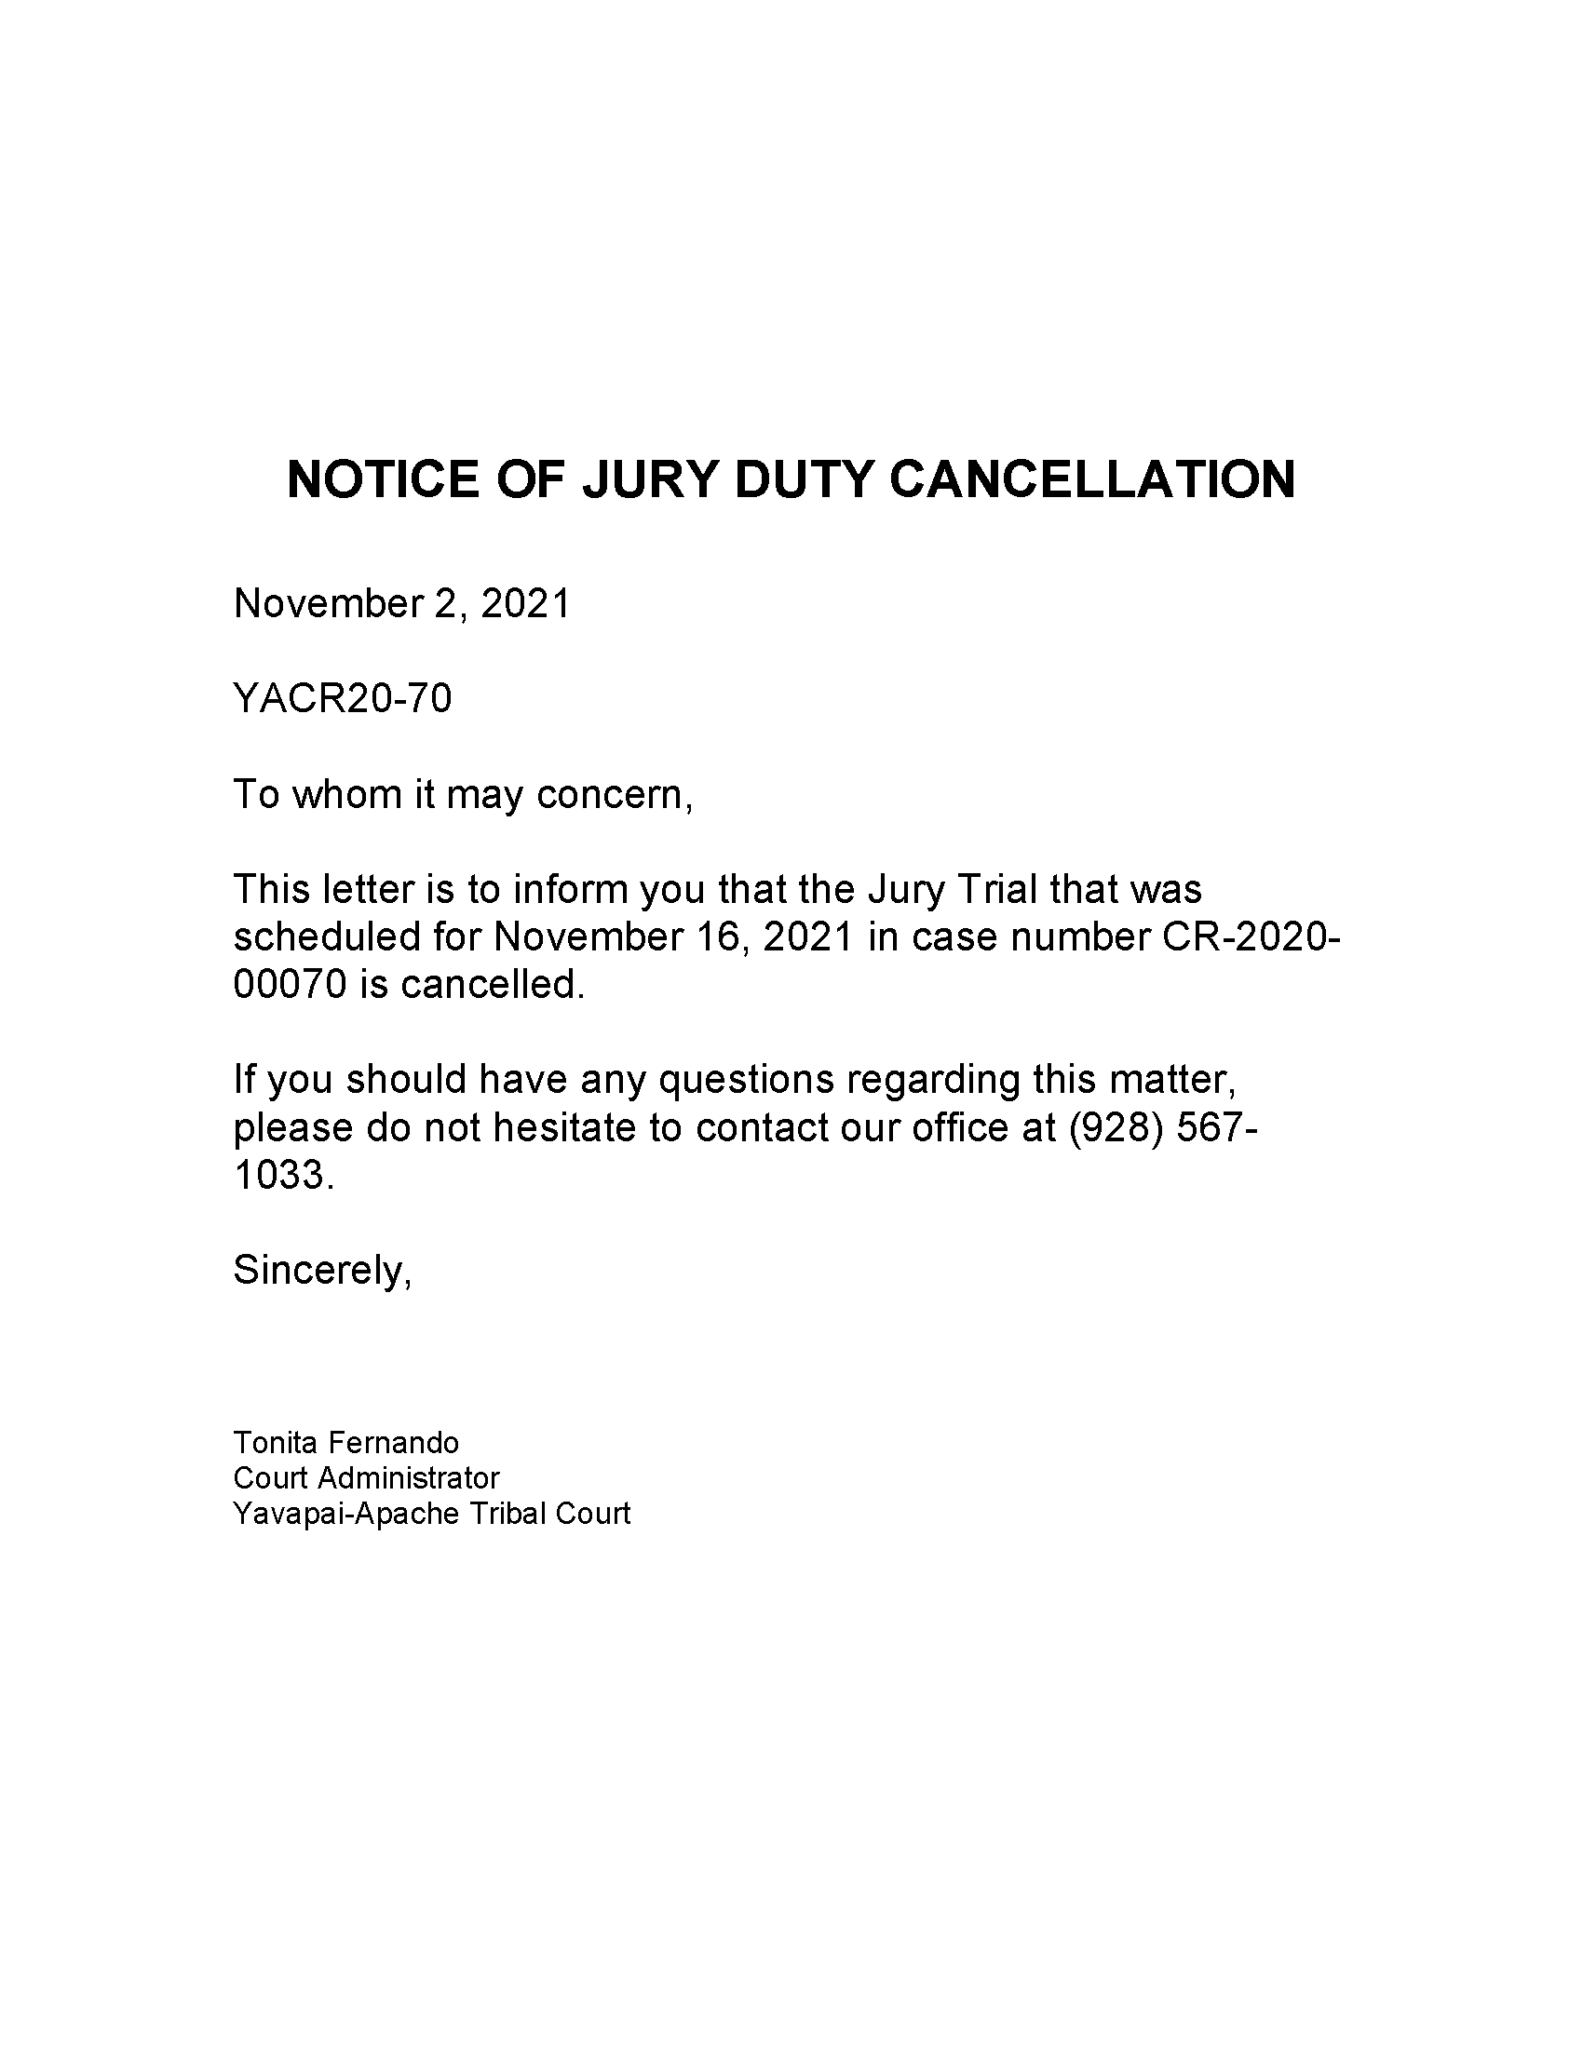 Jury Cancellation Letter 11/16 Yavapai Apache Nation